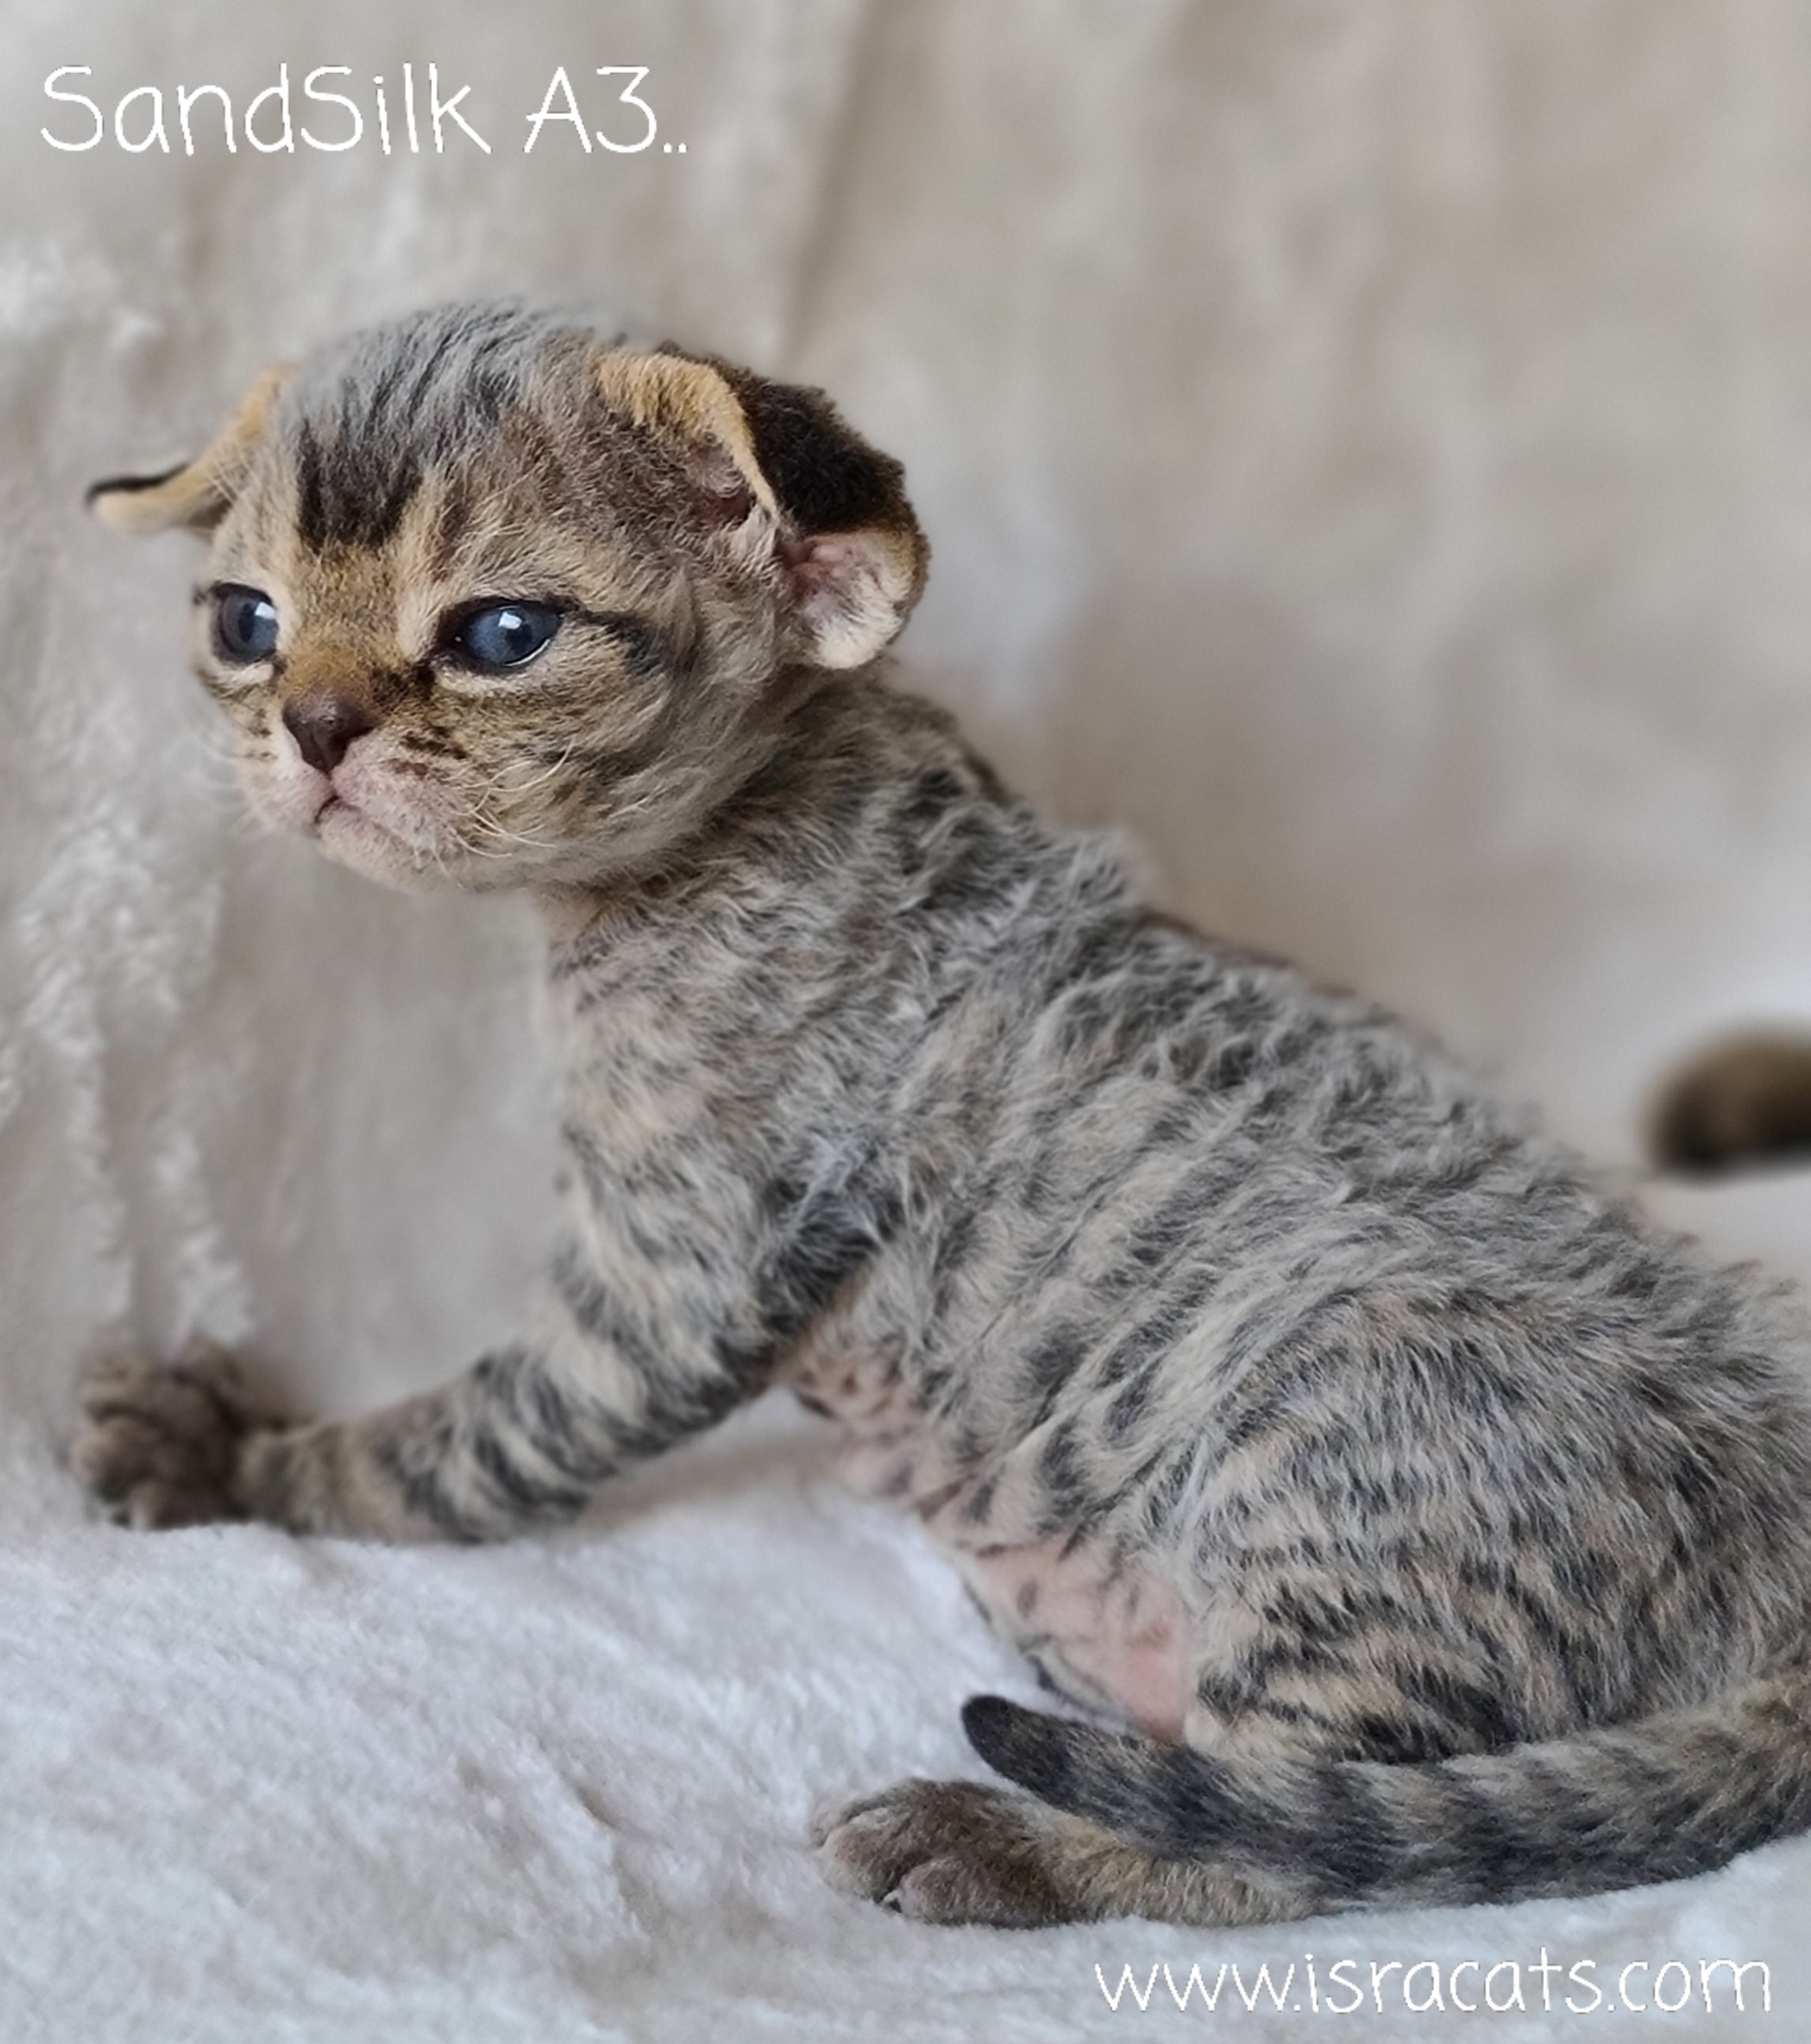  SandSilk Abigail, Devon Rex  female kitten, color brown tabby 